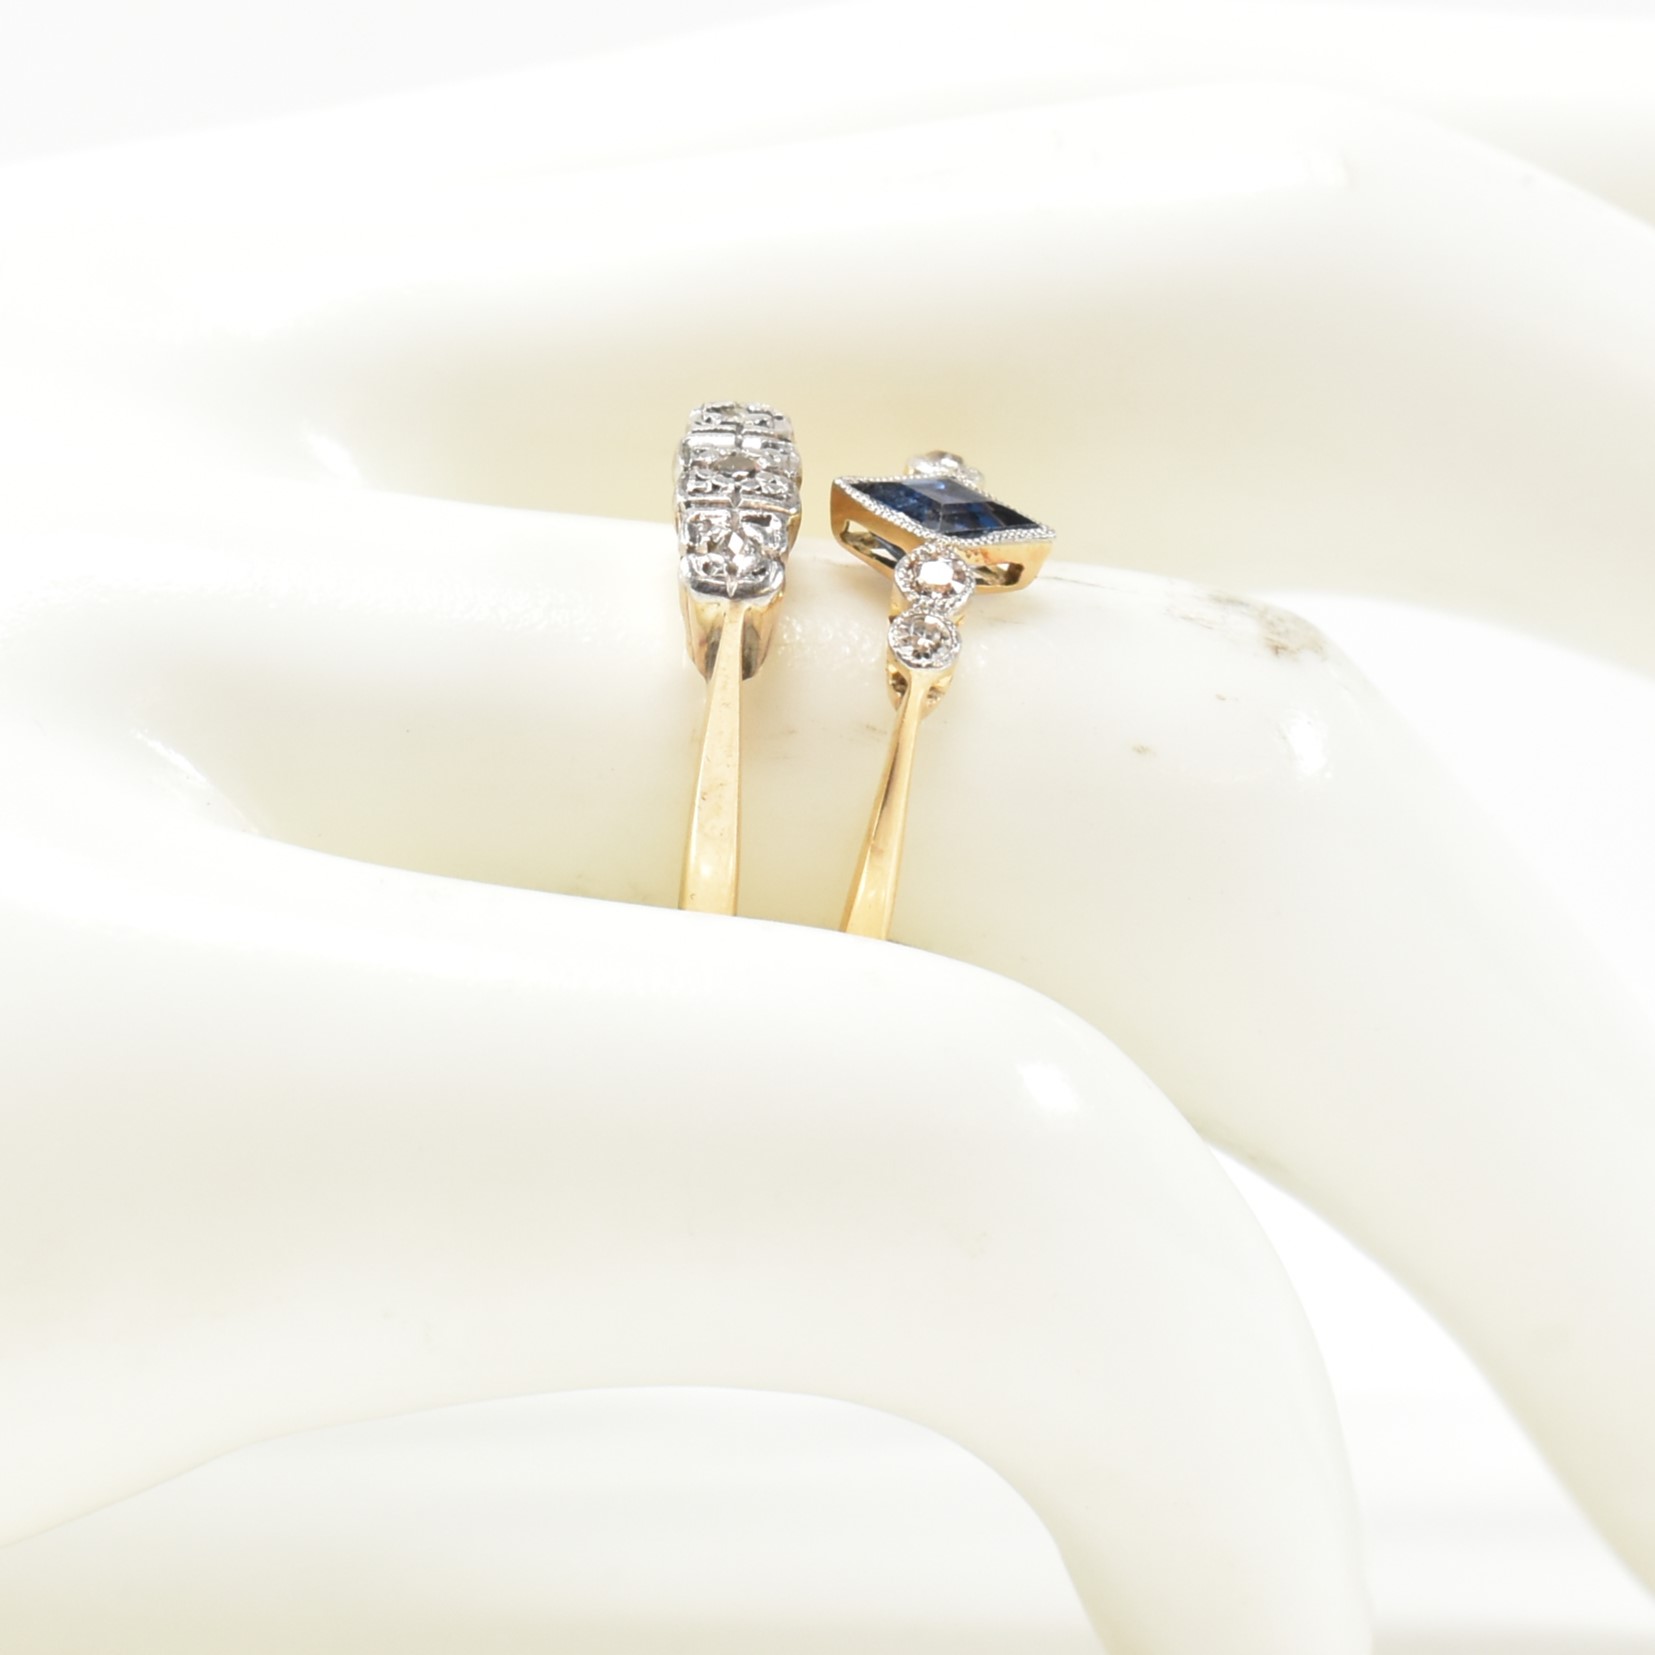 18CT GOLD SAPPHIRE & DIAMOND RING & 9CT GOLD & PLATINUM DIAMOND RING - Image 11 of 11